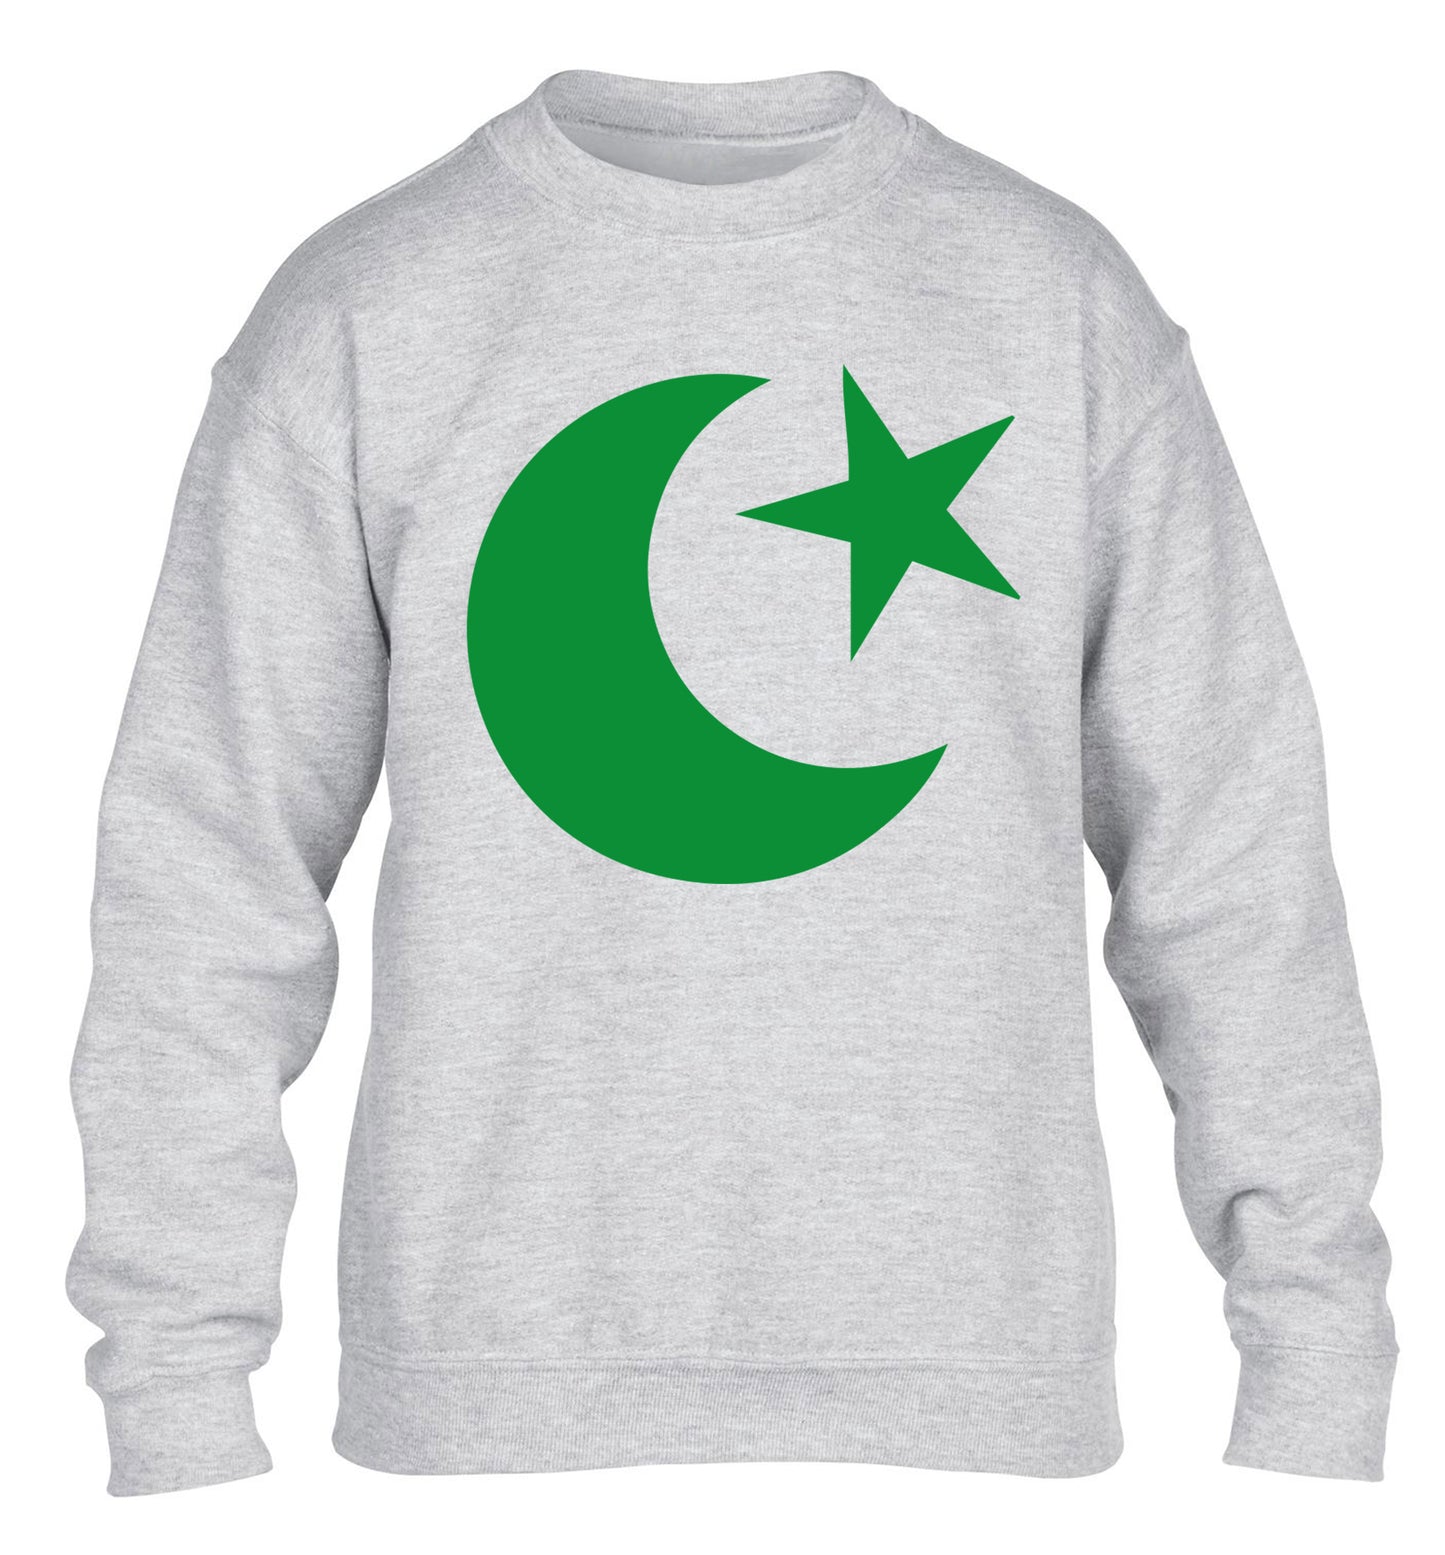 Eid symbol children's grey sweater 12-13 Years